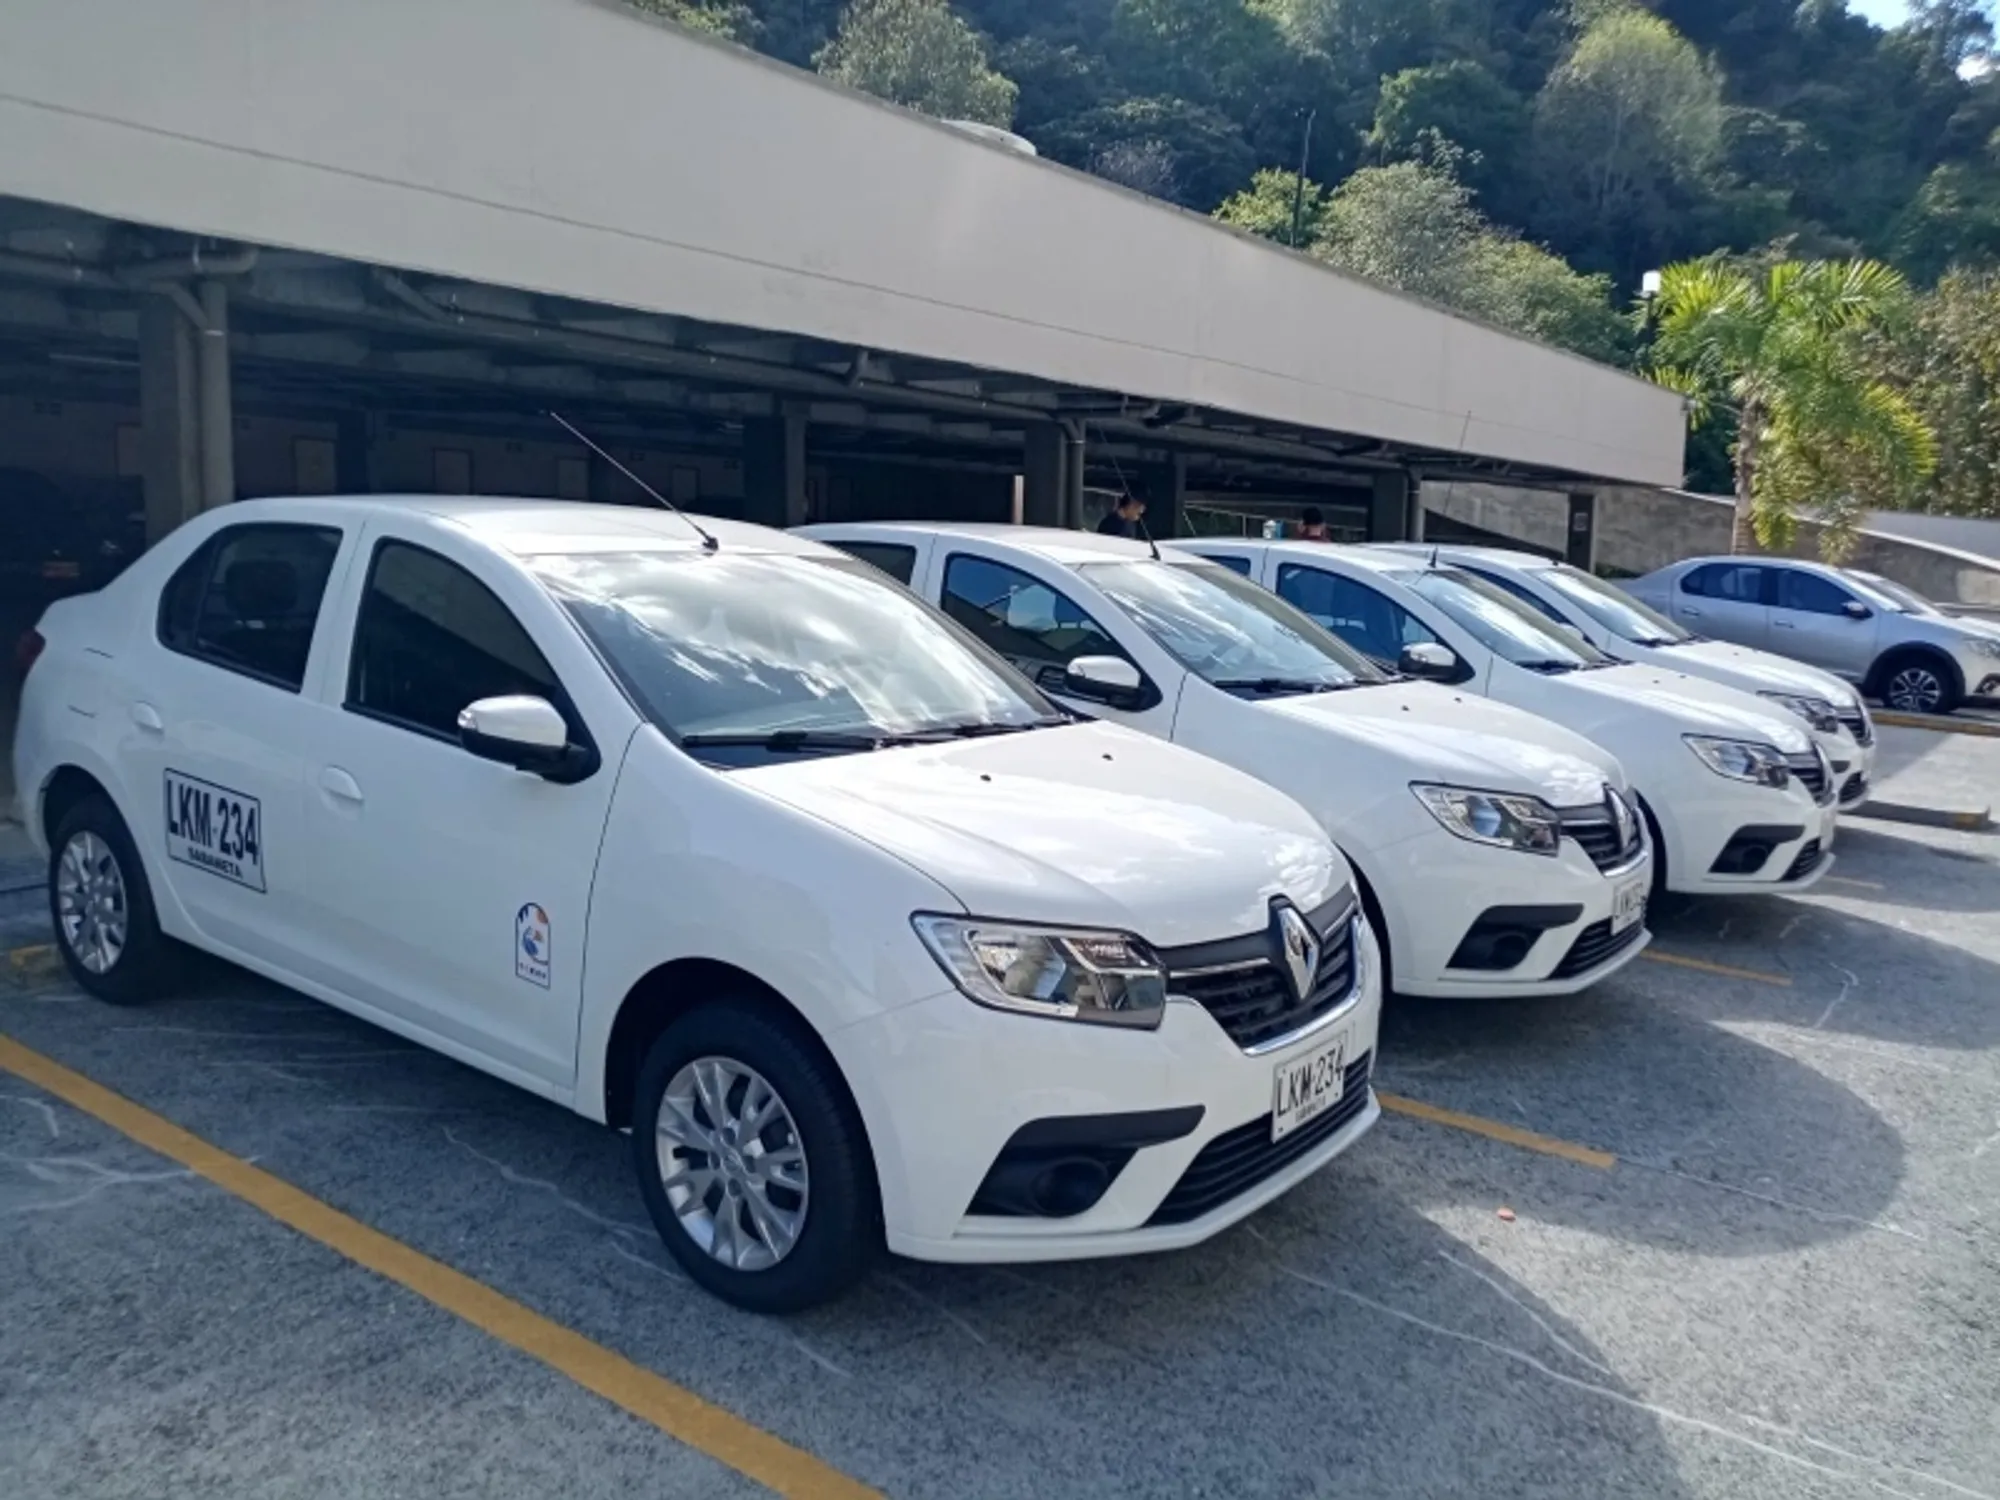 Vendo flota de carros Renault Logan servicios especial